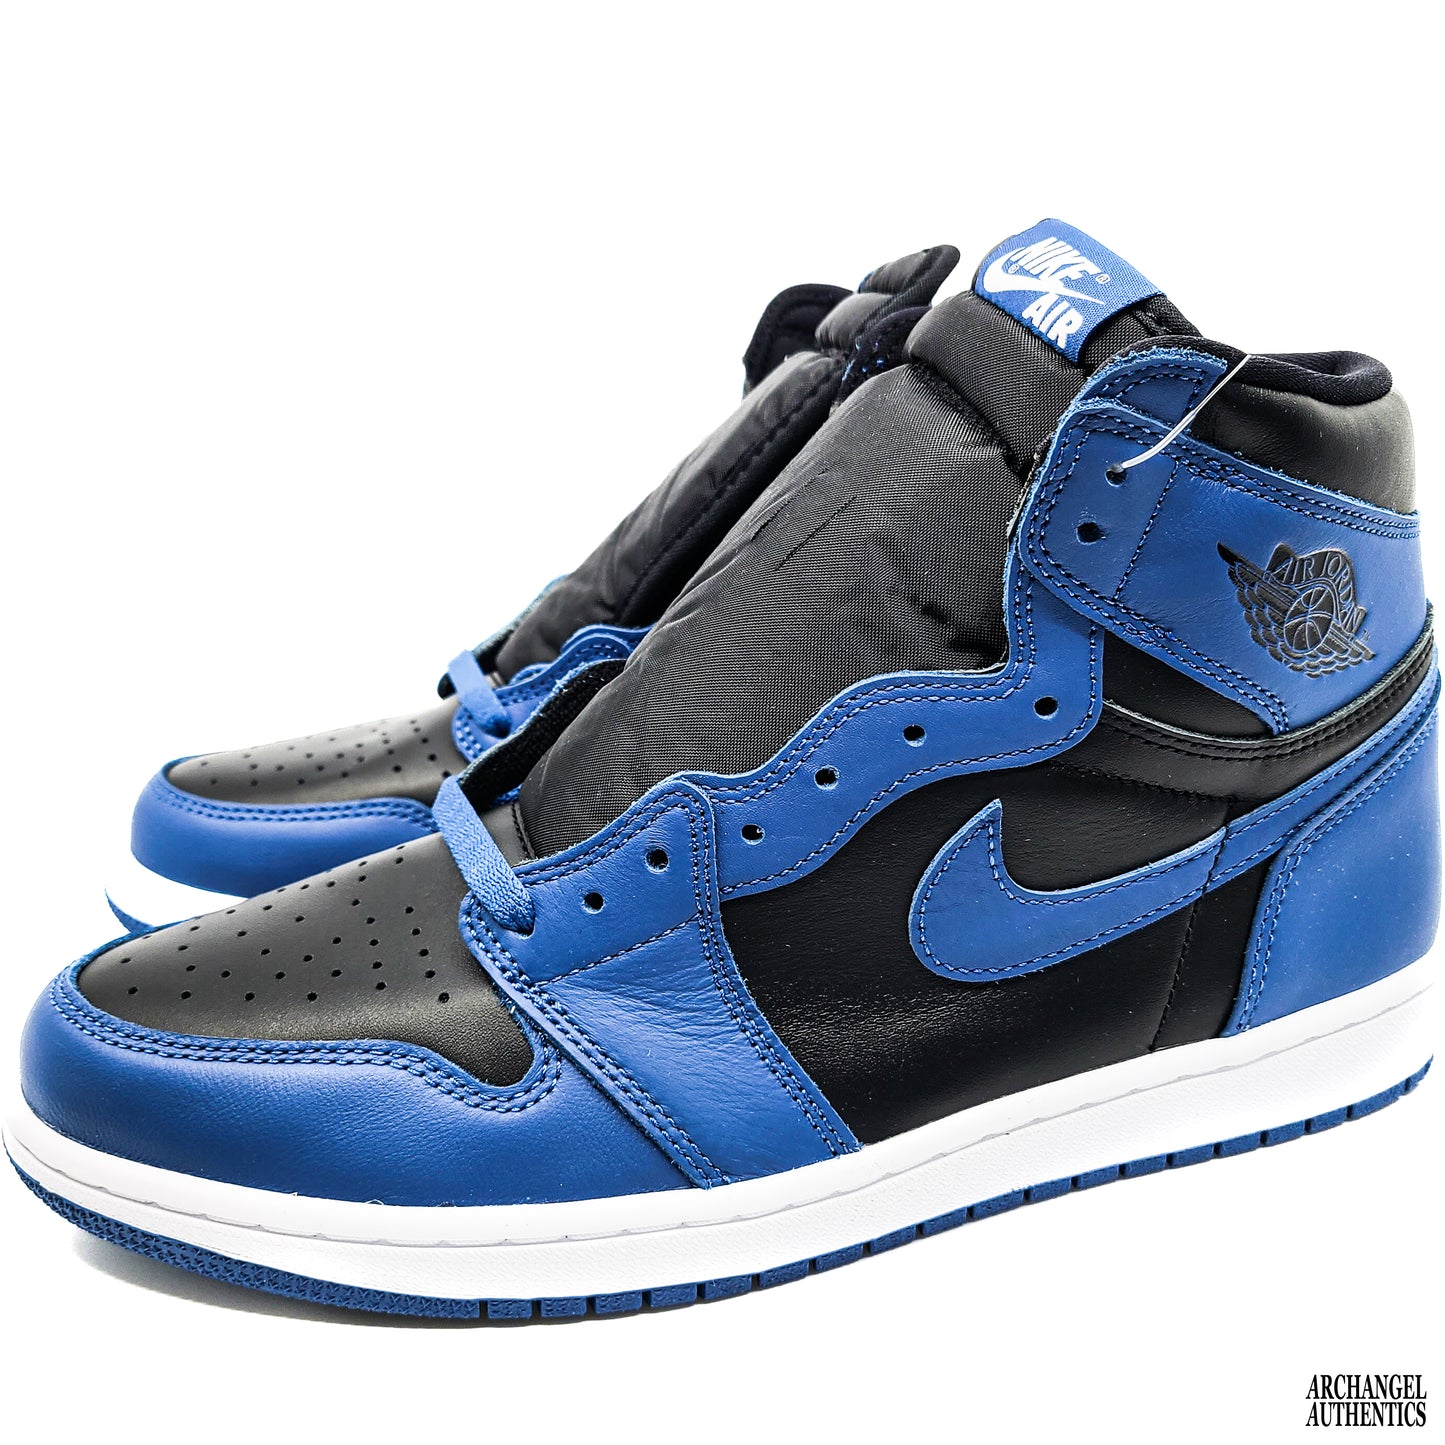 Nike Air Jordan 1 Retro High OG azul marino oscuro (GS)